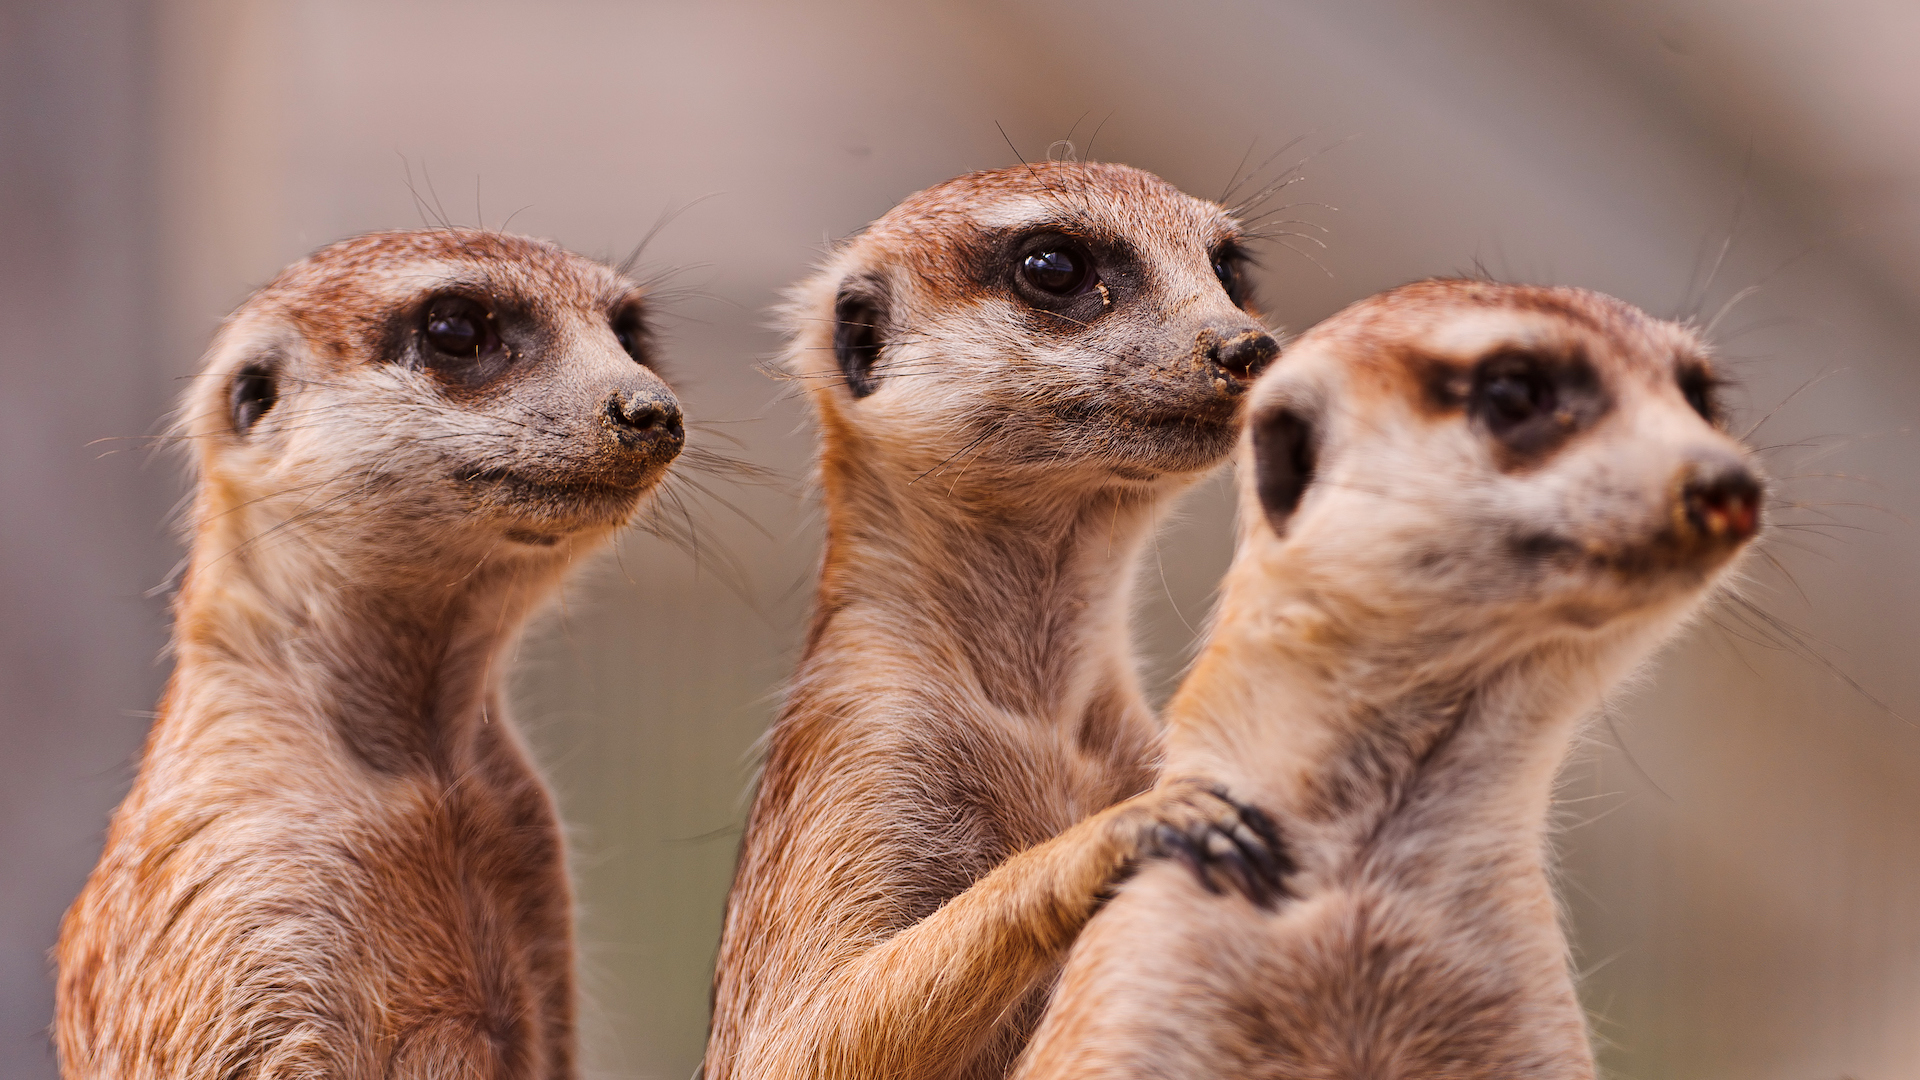 A photograph of three meerkats standing up